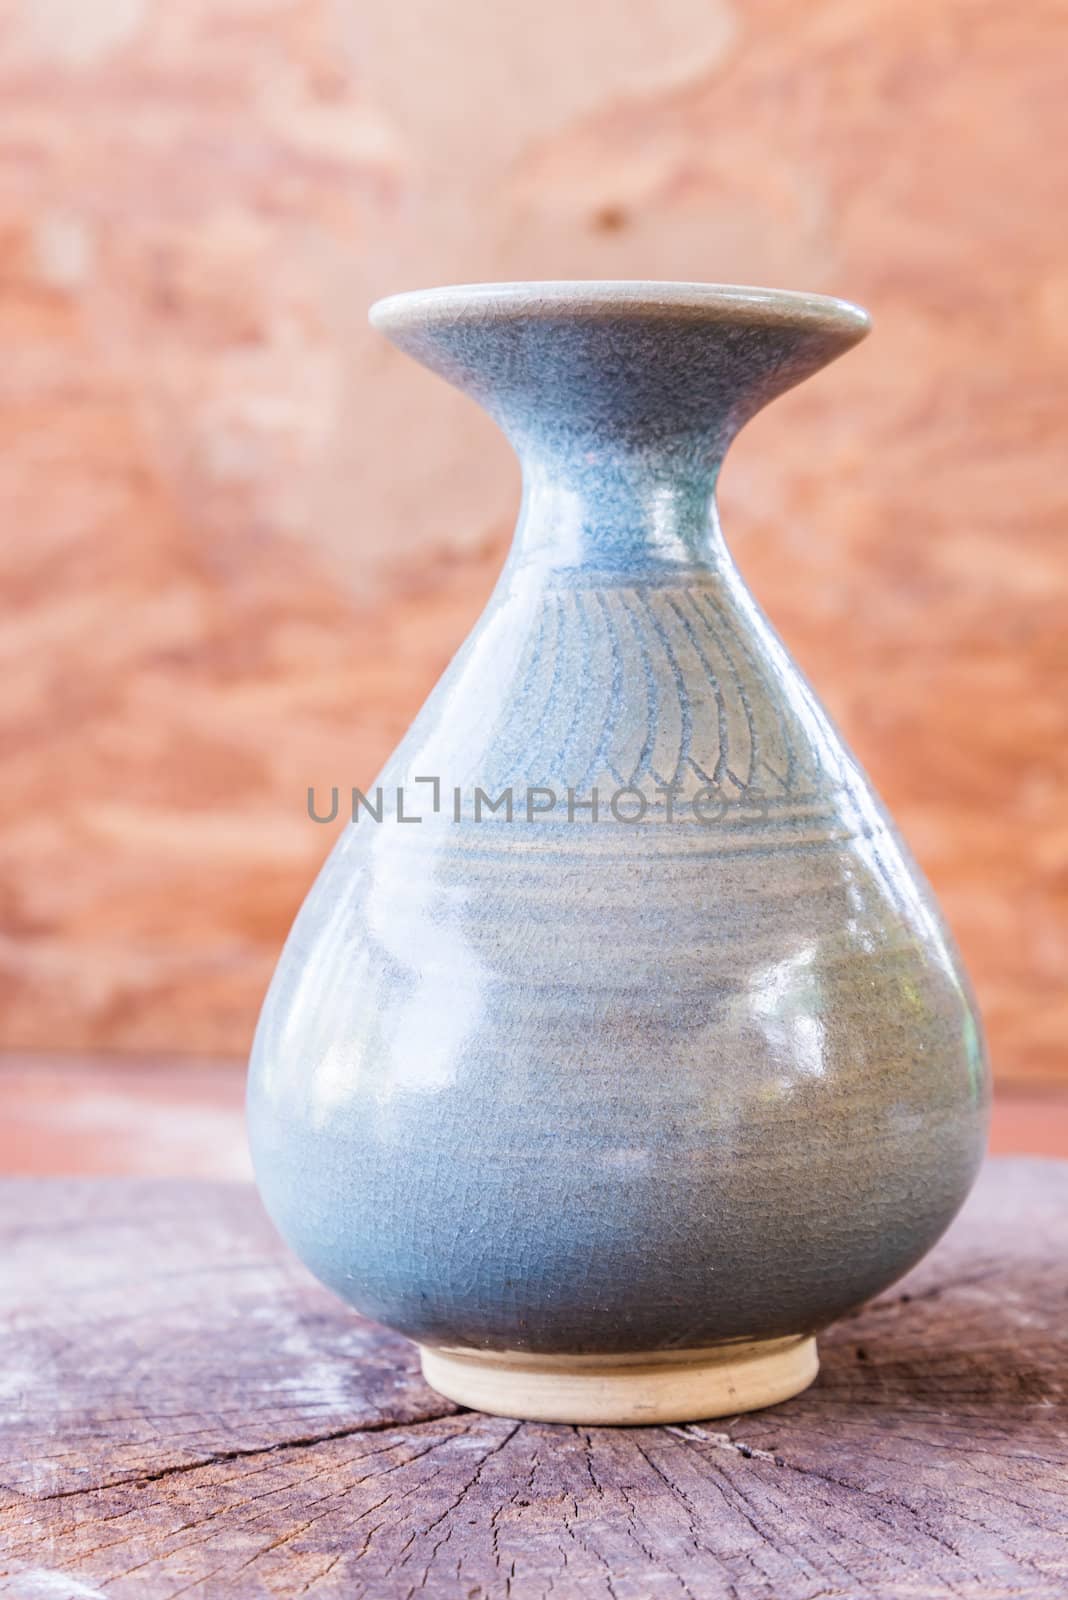 vintage ceramic vase on wood by wmitrmatr